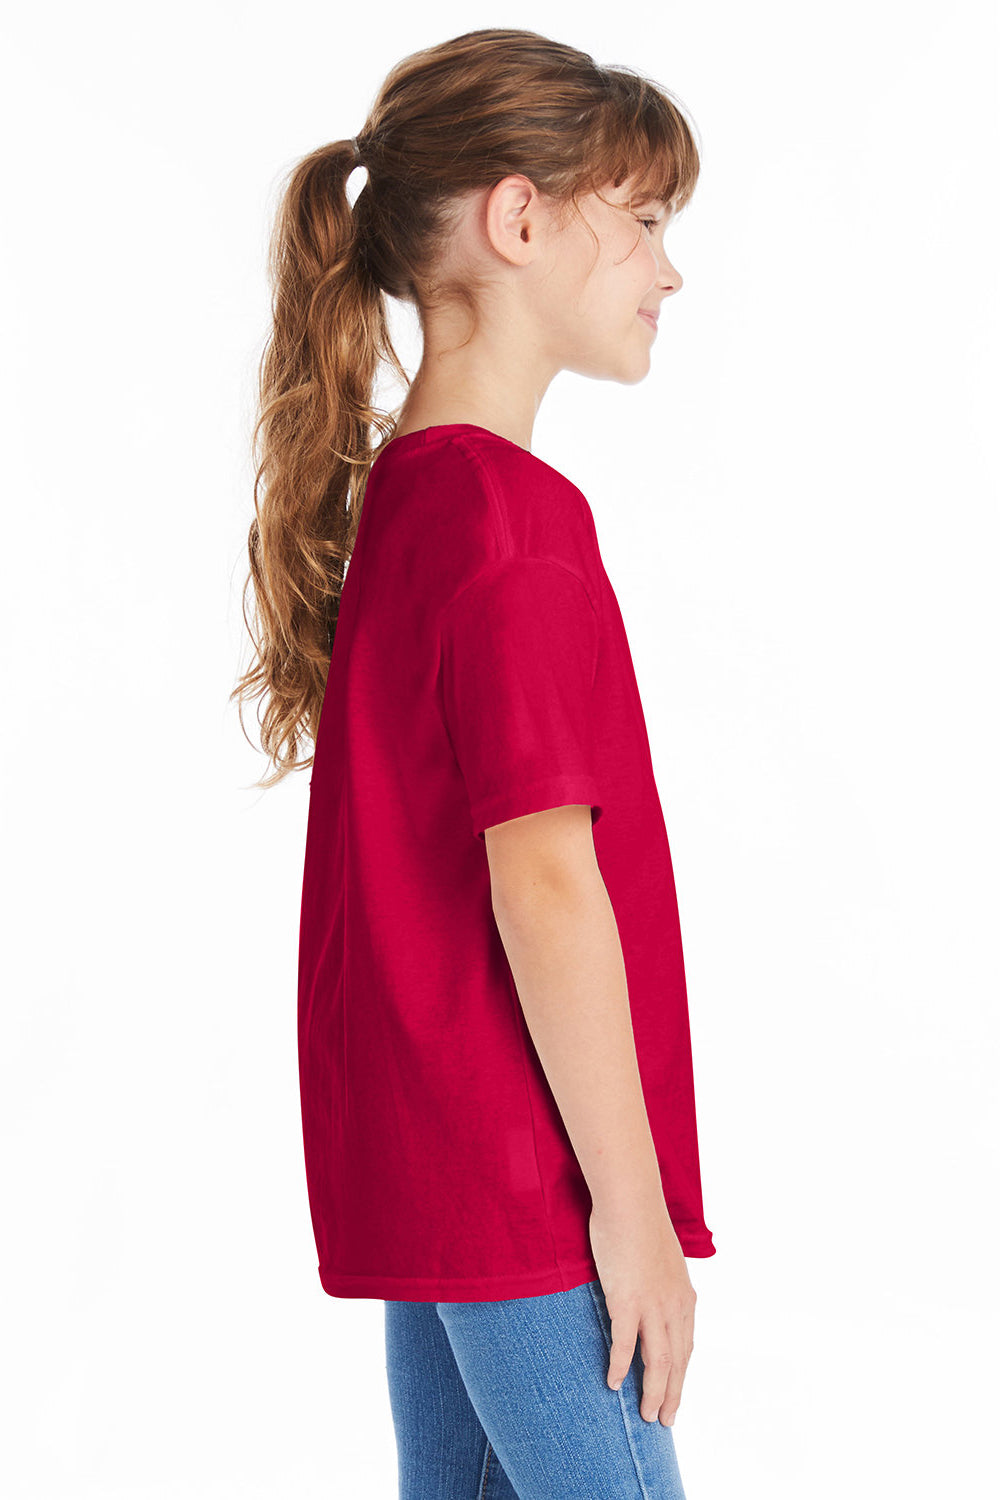 Hanes 5480 Youth ComfortSoft Short Sleeve Crewneck T-Shirt Athletic Crimson Red SIde